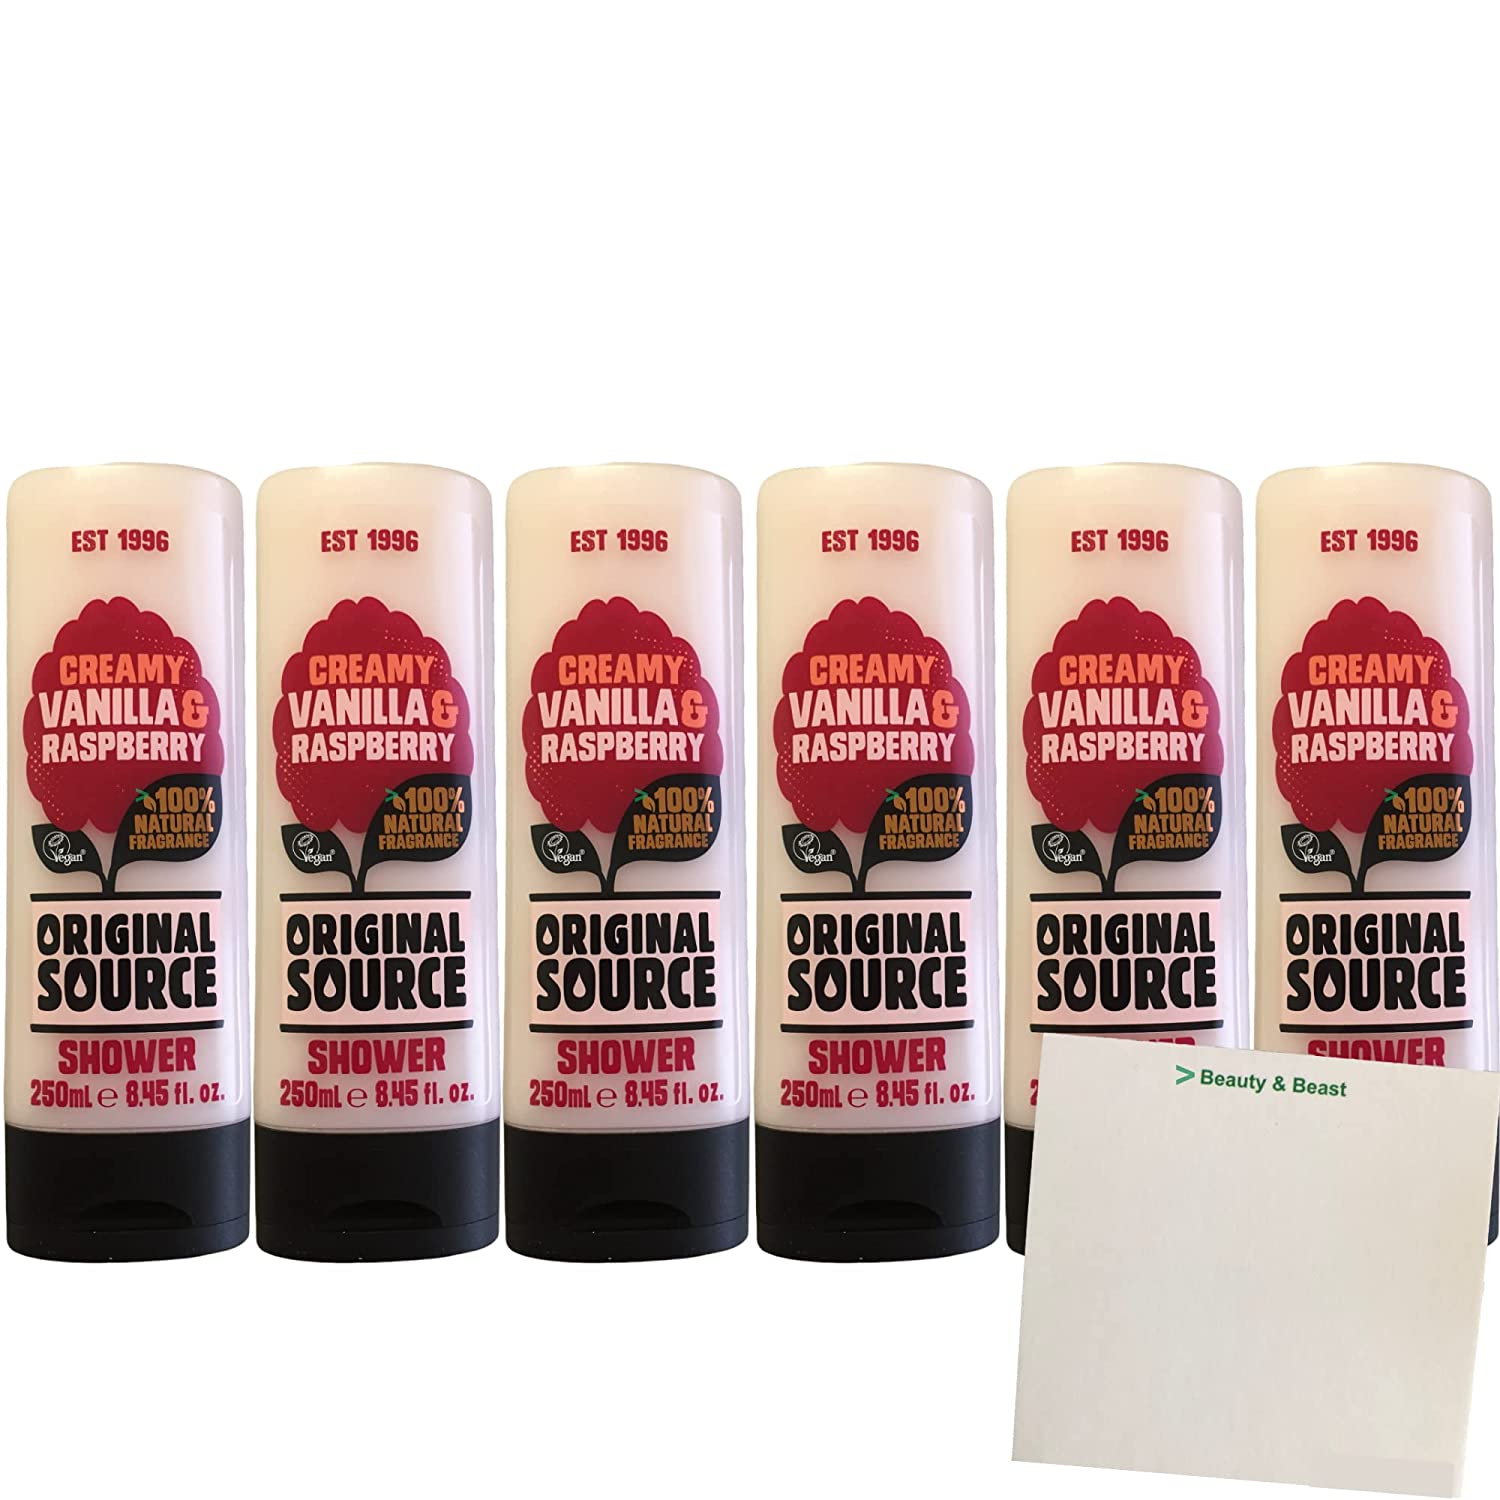 Original Source Creamy Vanilla & Raspberry Shower Gel Pack of 6 (6 x 250 ml Bottles) + usy Block